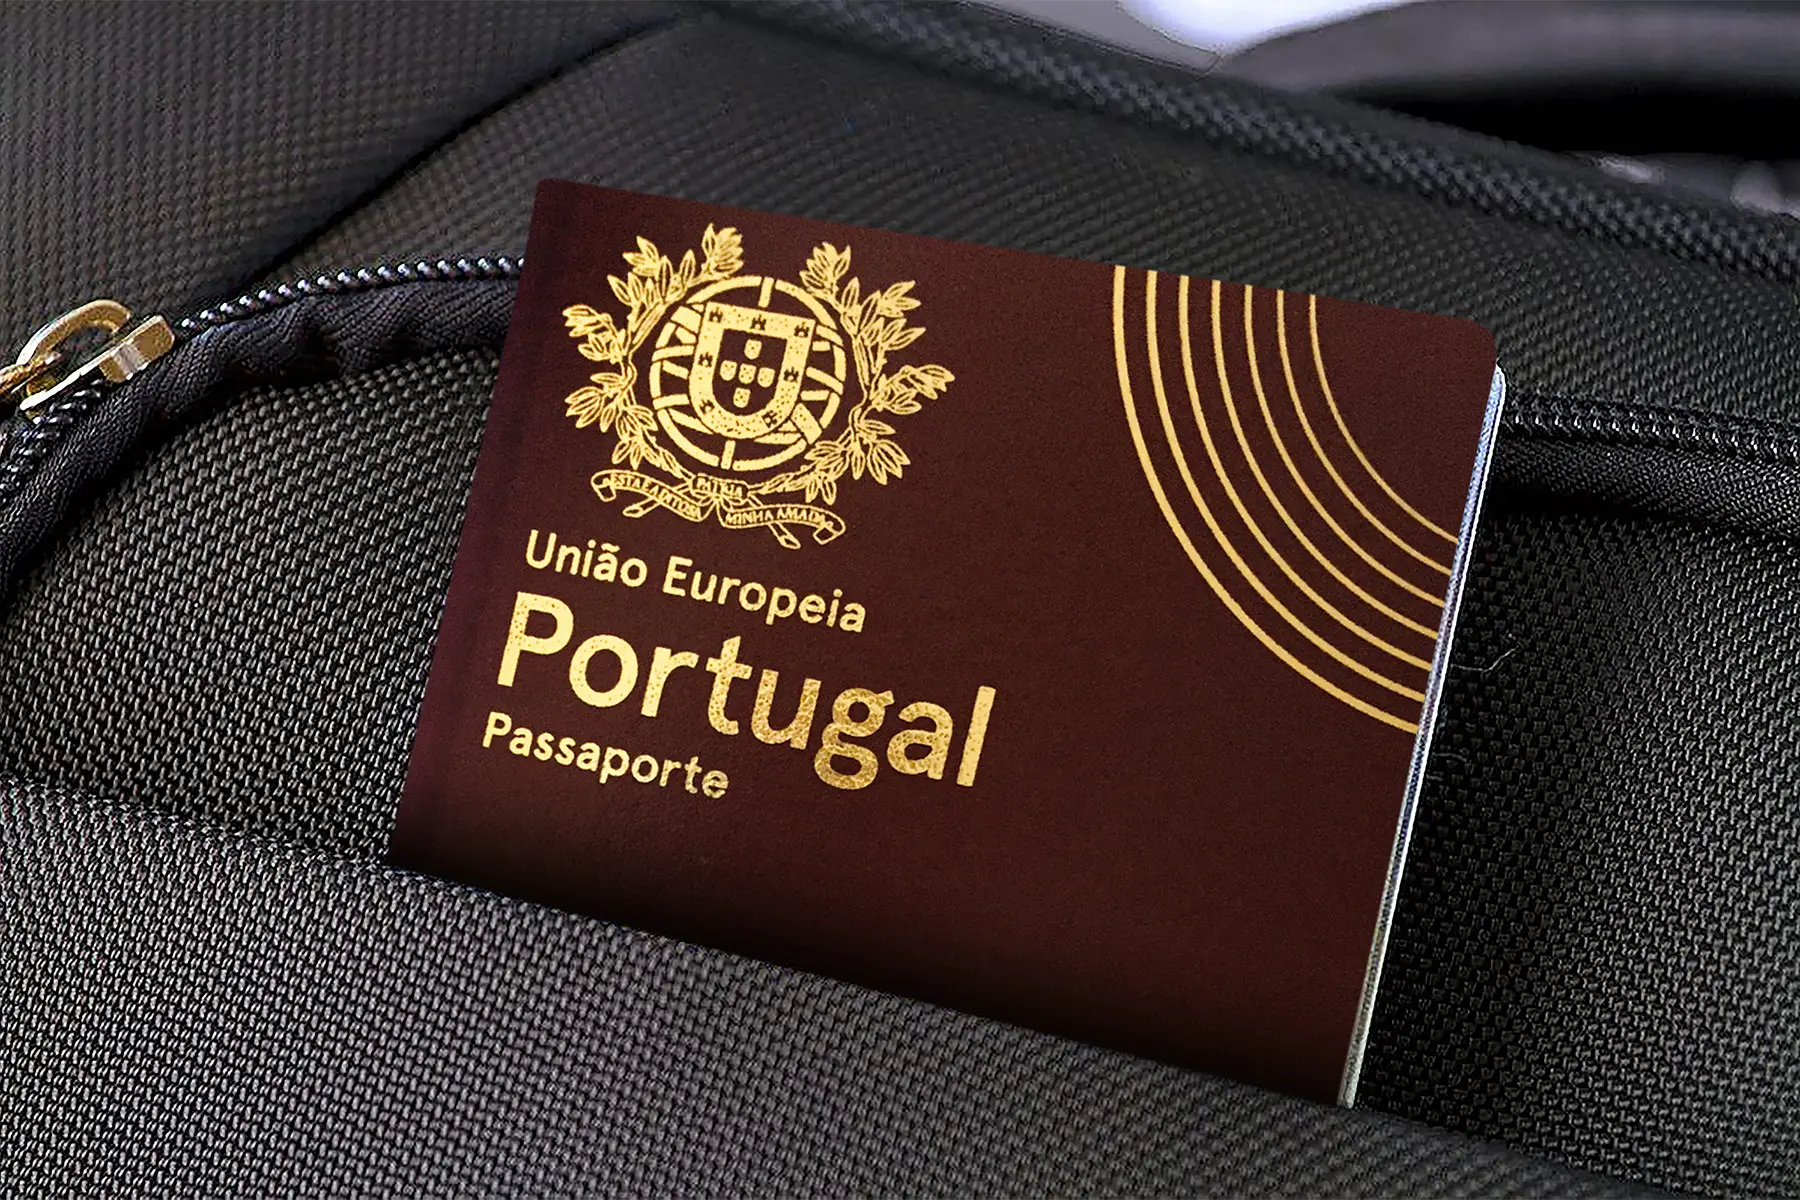 a Portuguese passport in a suitcase pocket